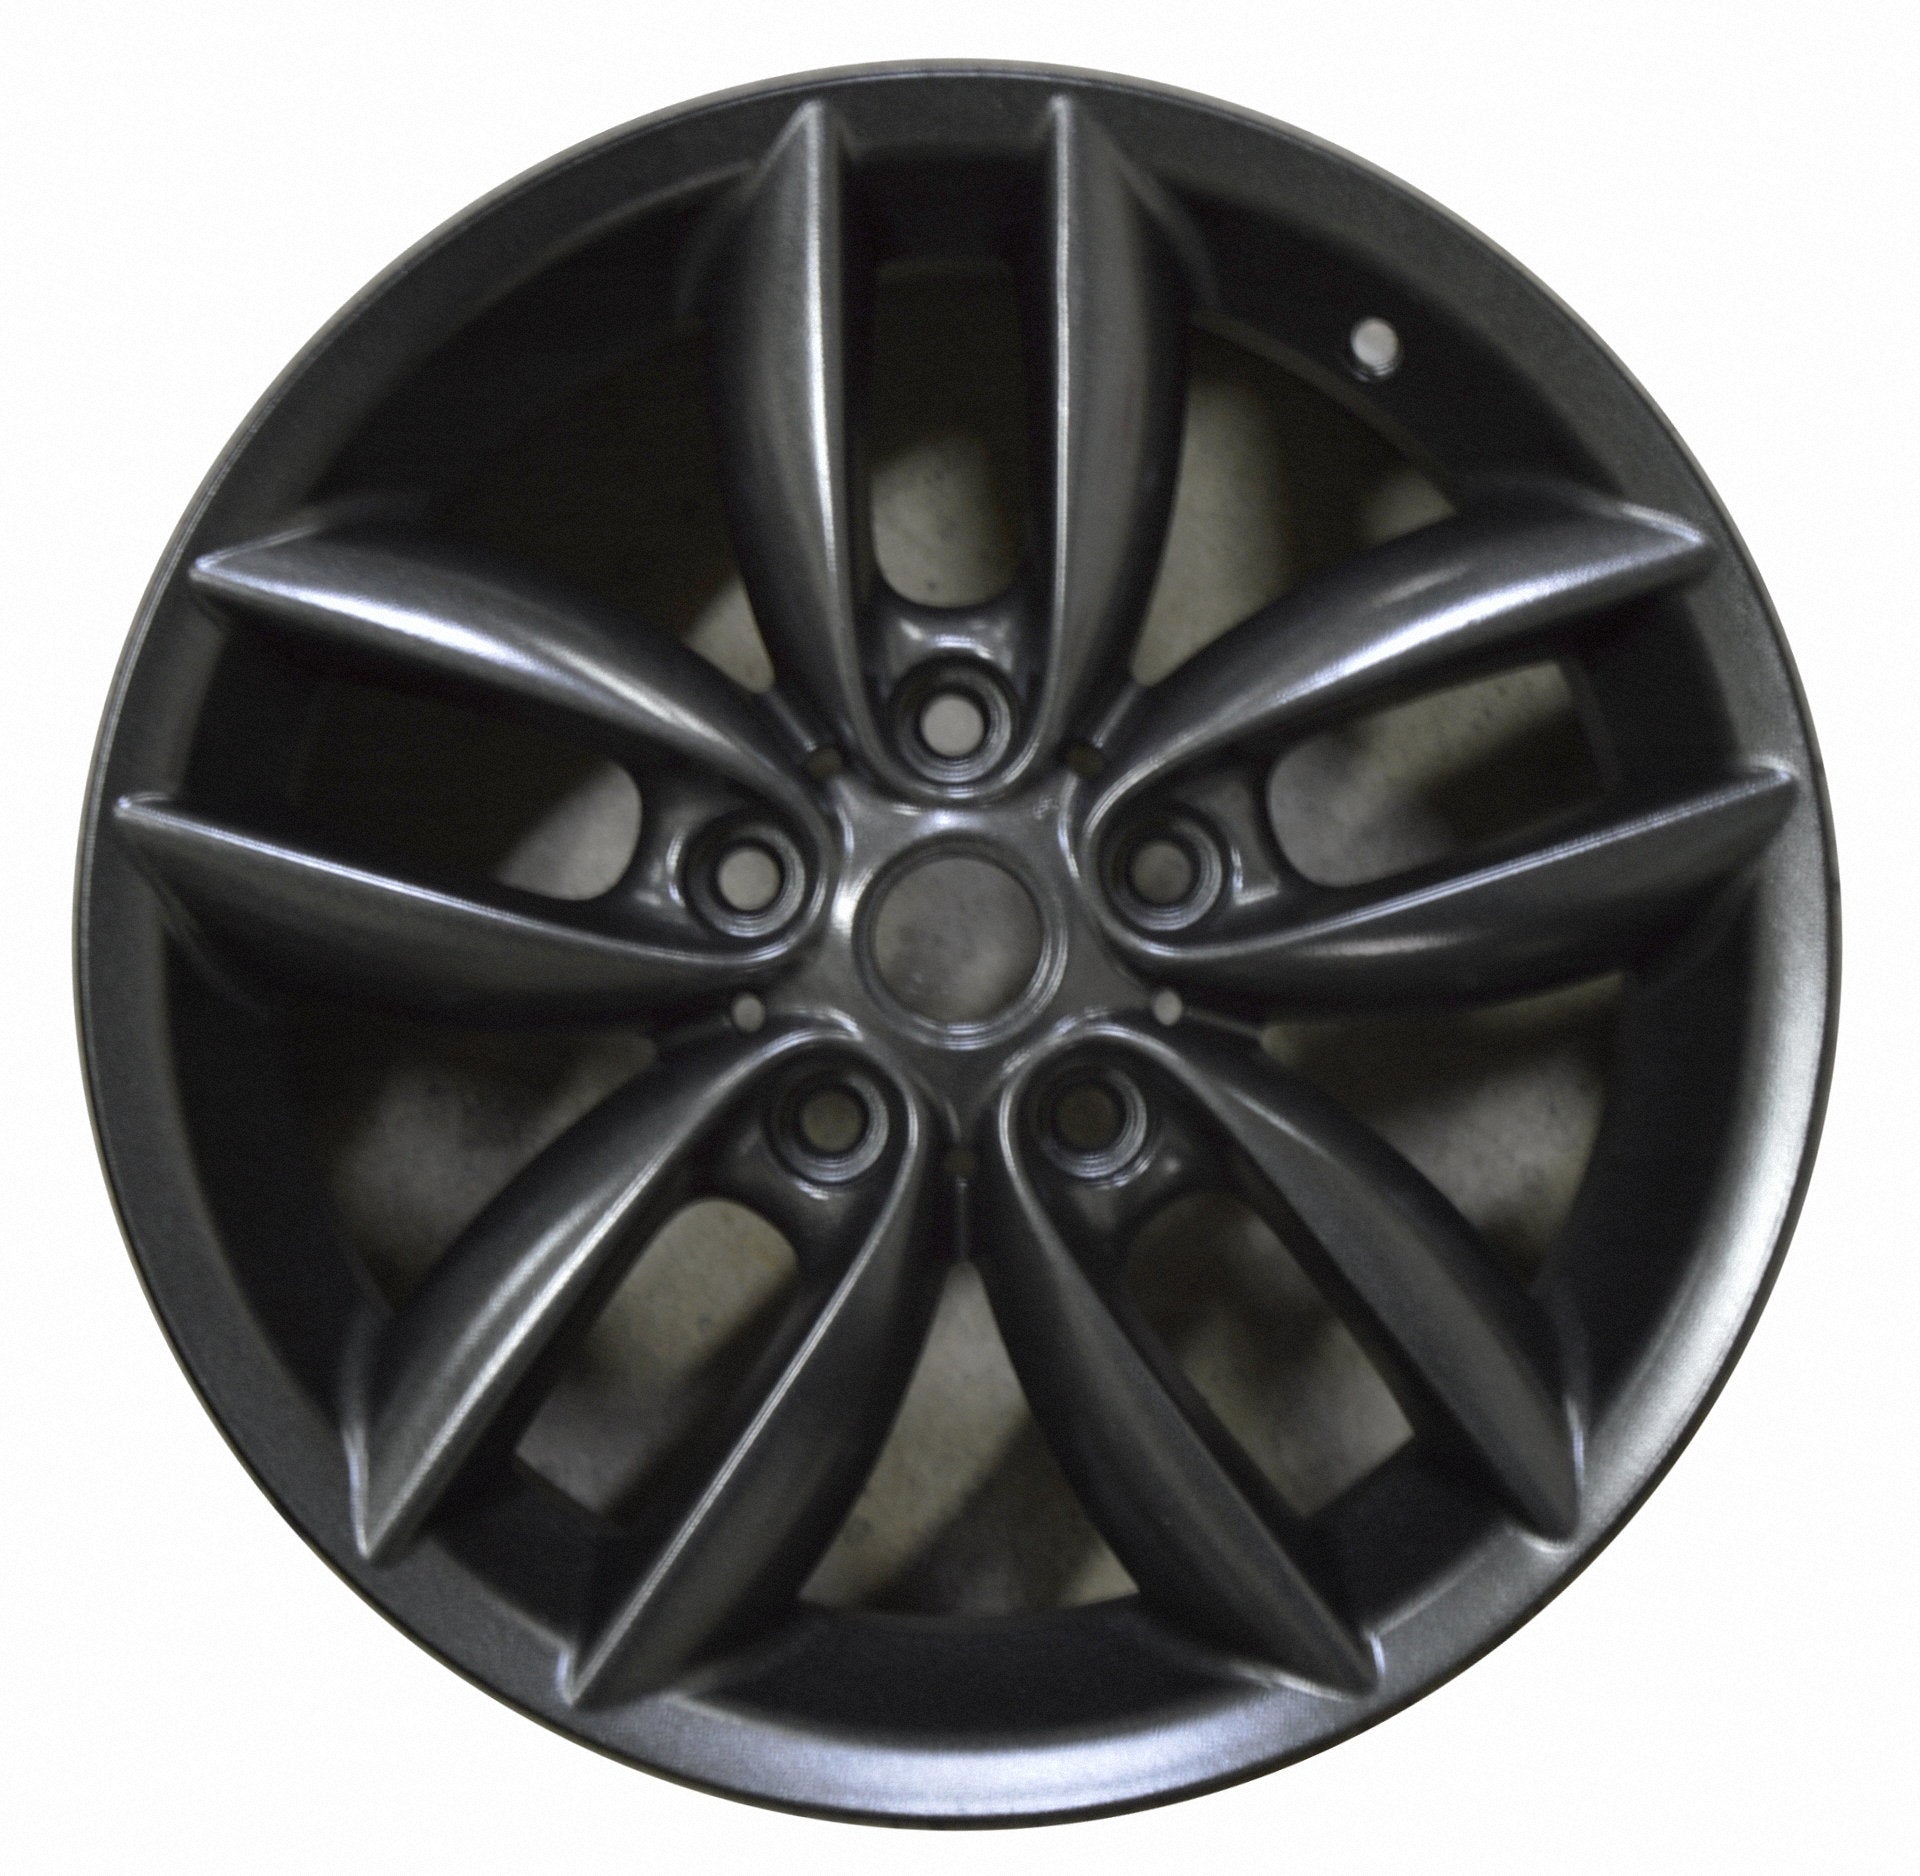 MINI Countryman  2011, 2012, 2013, 2014 Factory OEM Car Wheel Size 19x7.5 Alloy WAO.71481.LC160.FFC7